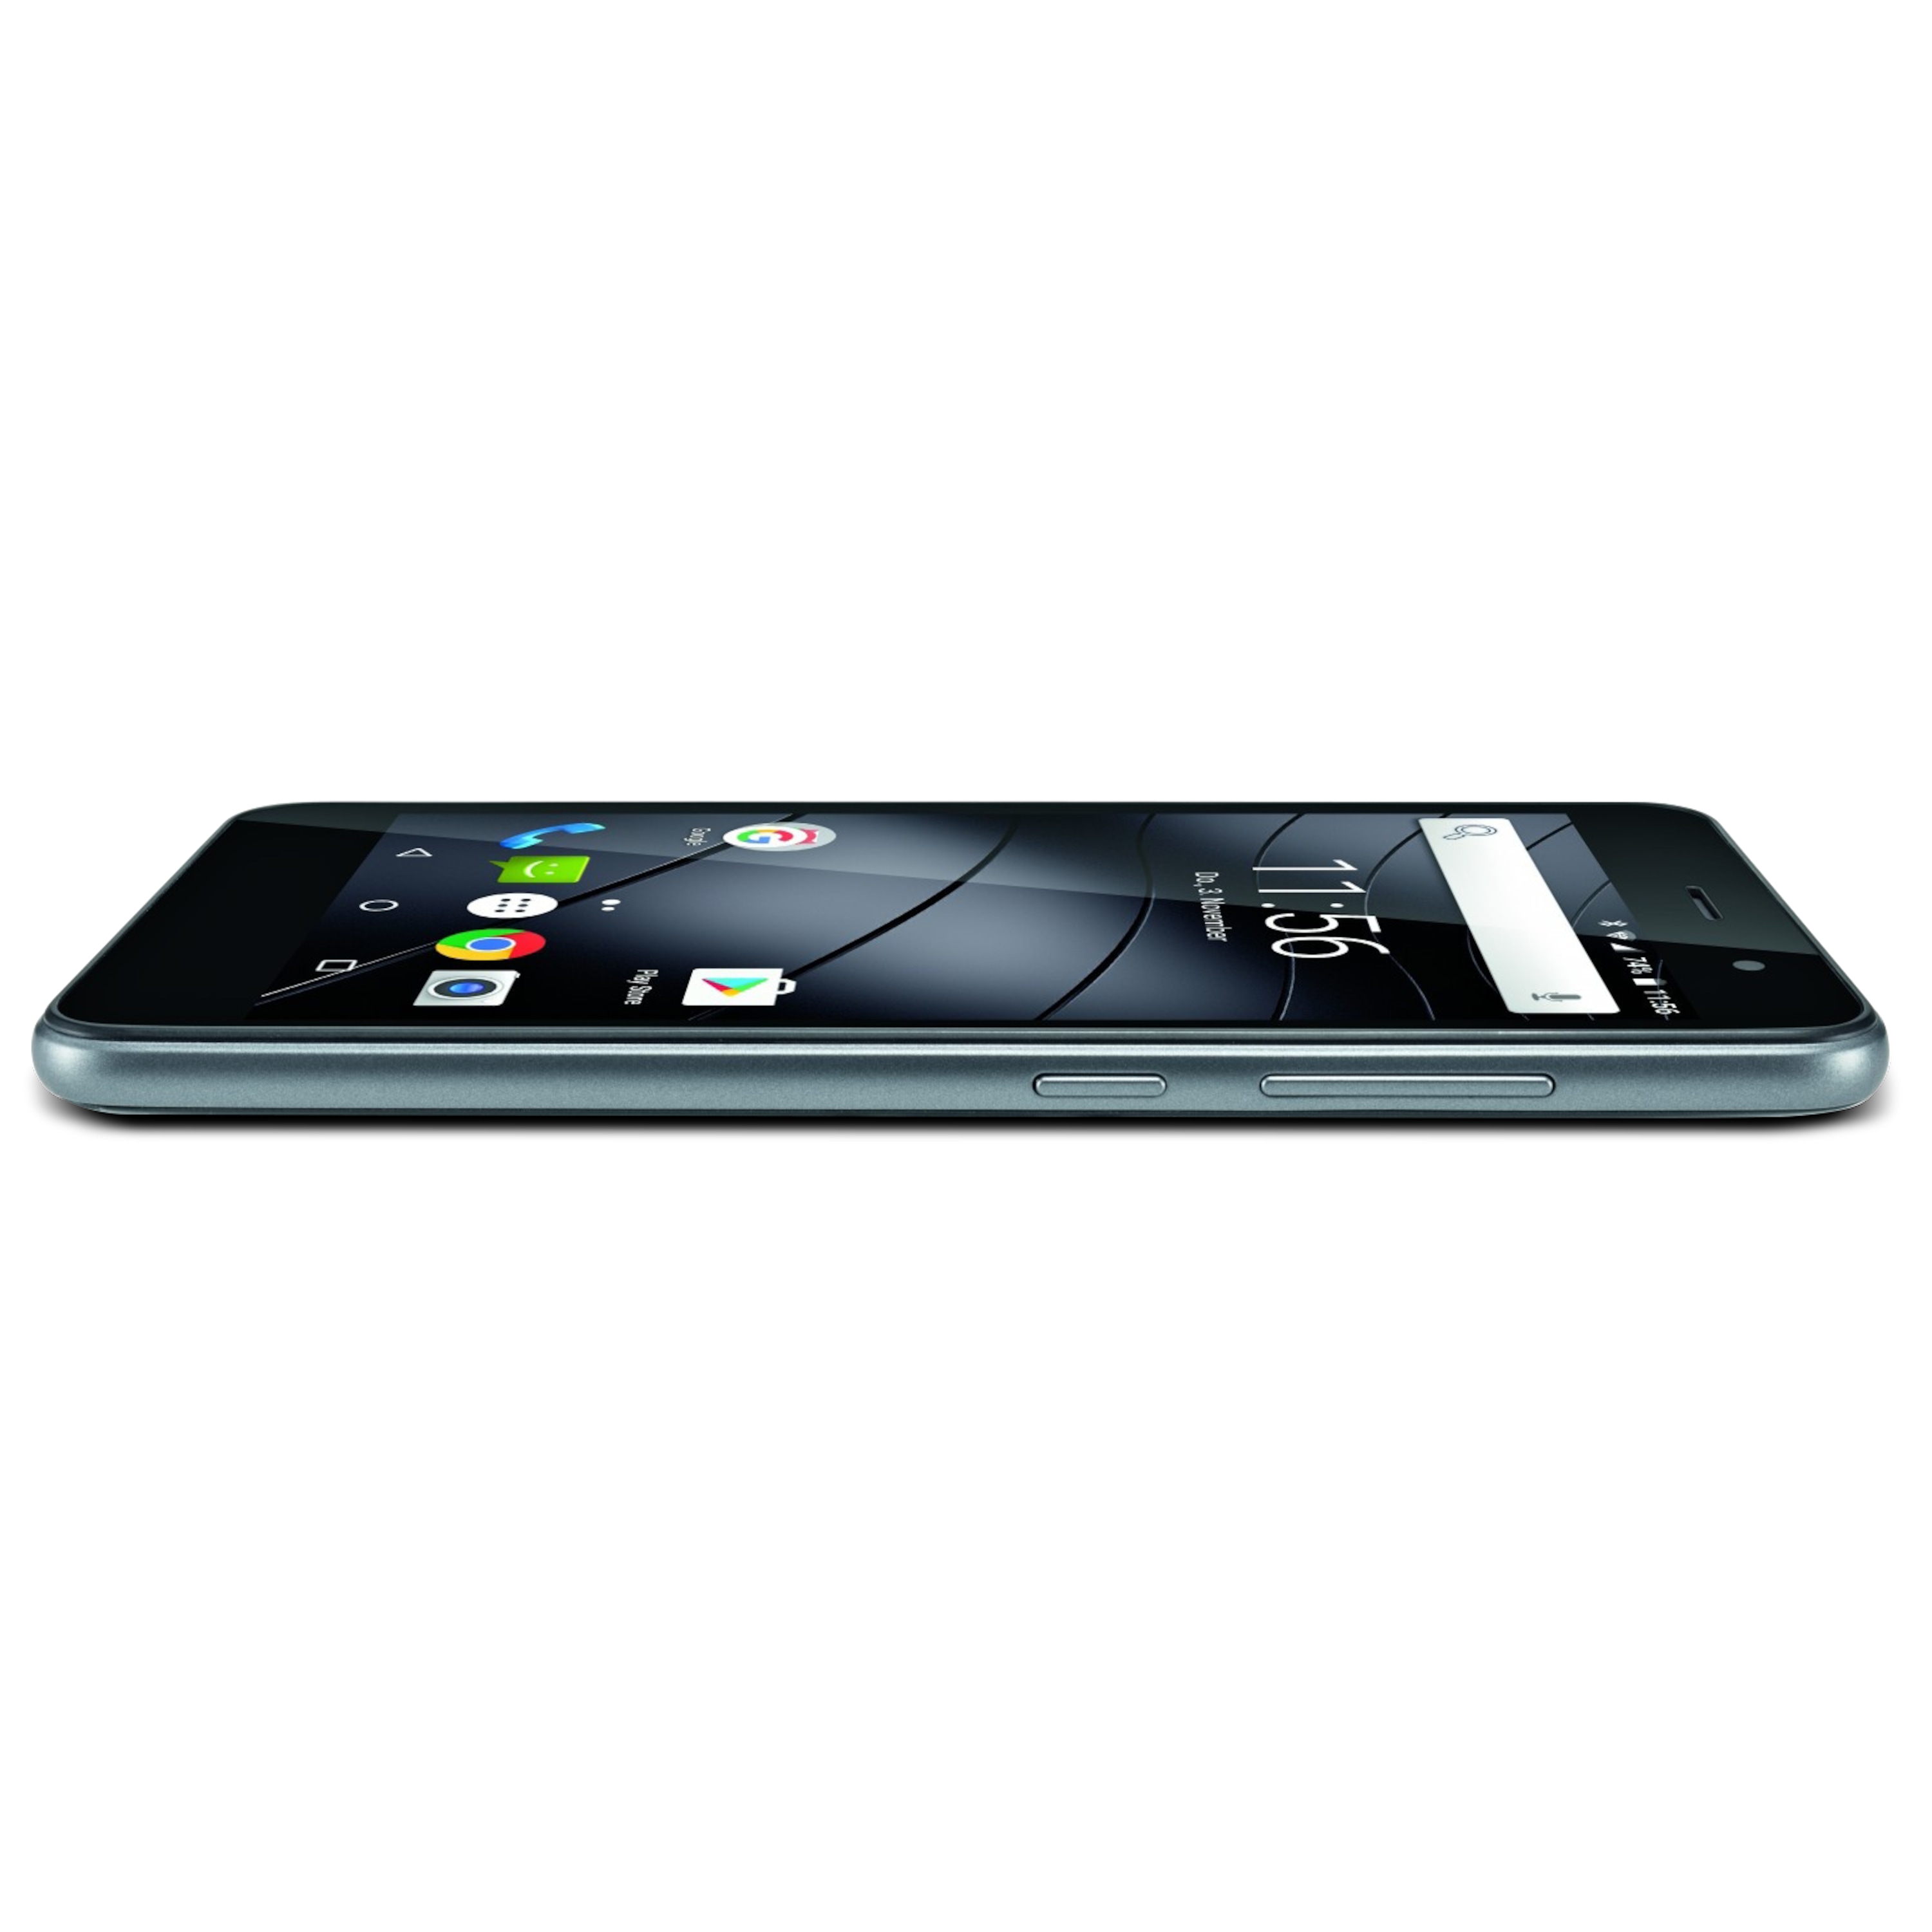 GIGASET Gigaset GS 160 Smartphone, 12,7 cm (5'') IPS HD Display, 1 GB RAM, 16 GB Speicher, Quad-Core-Prozessor, LTE  (B-Ware)